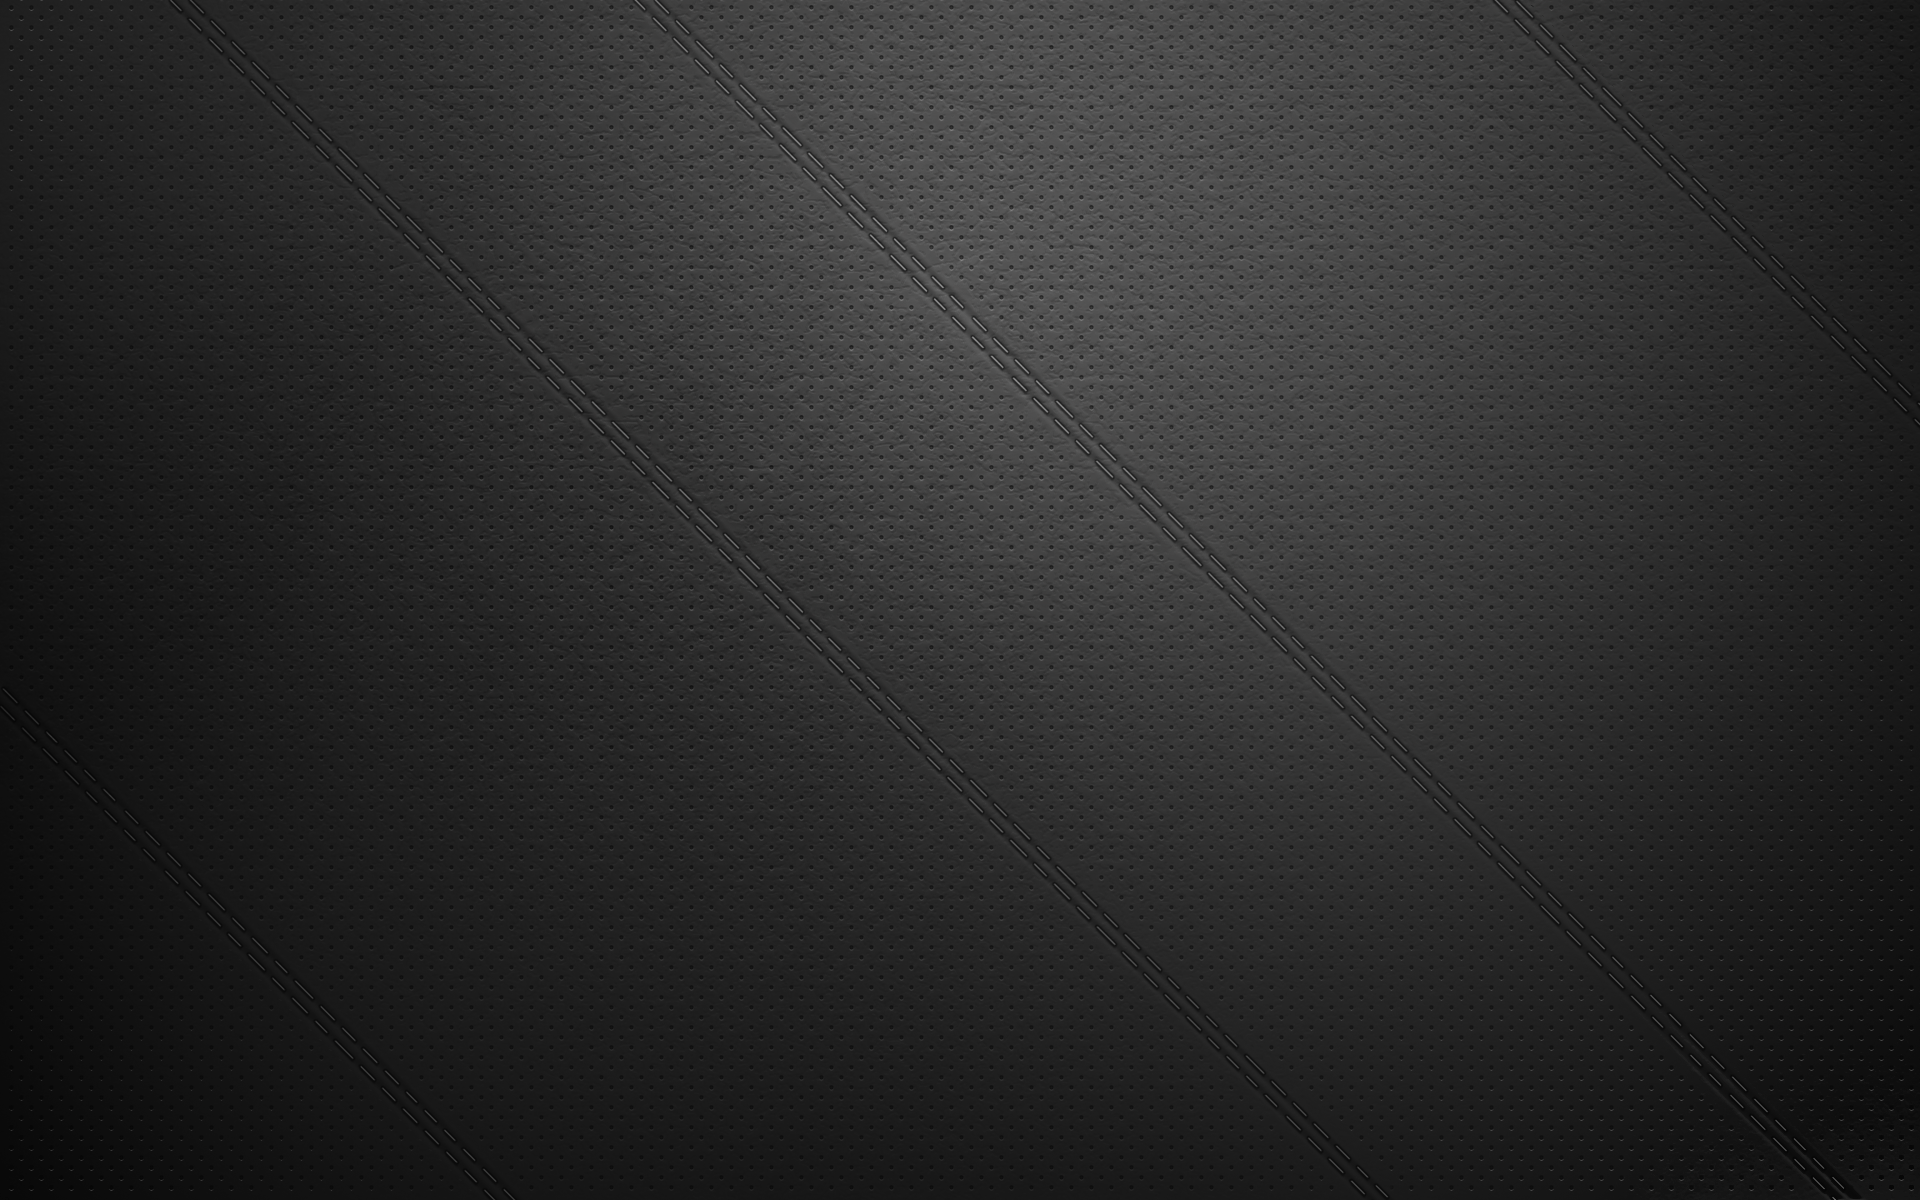 The Art of Adam Betts Black Leather Apple Desktop Background